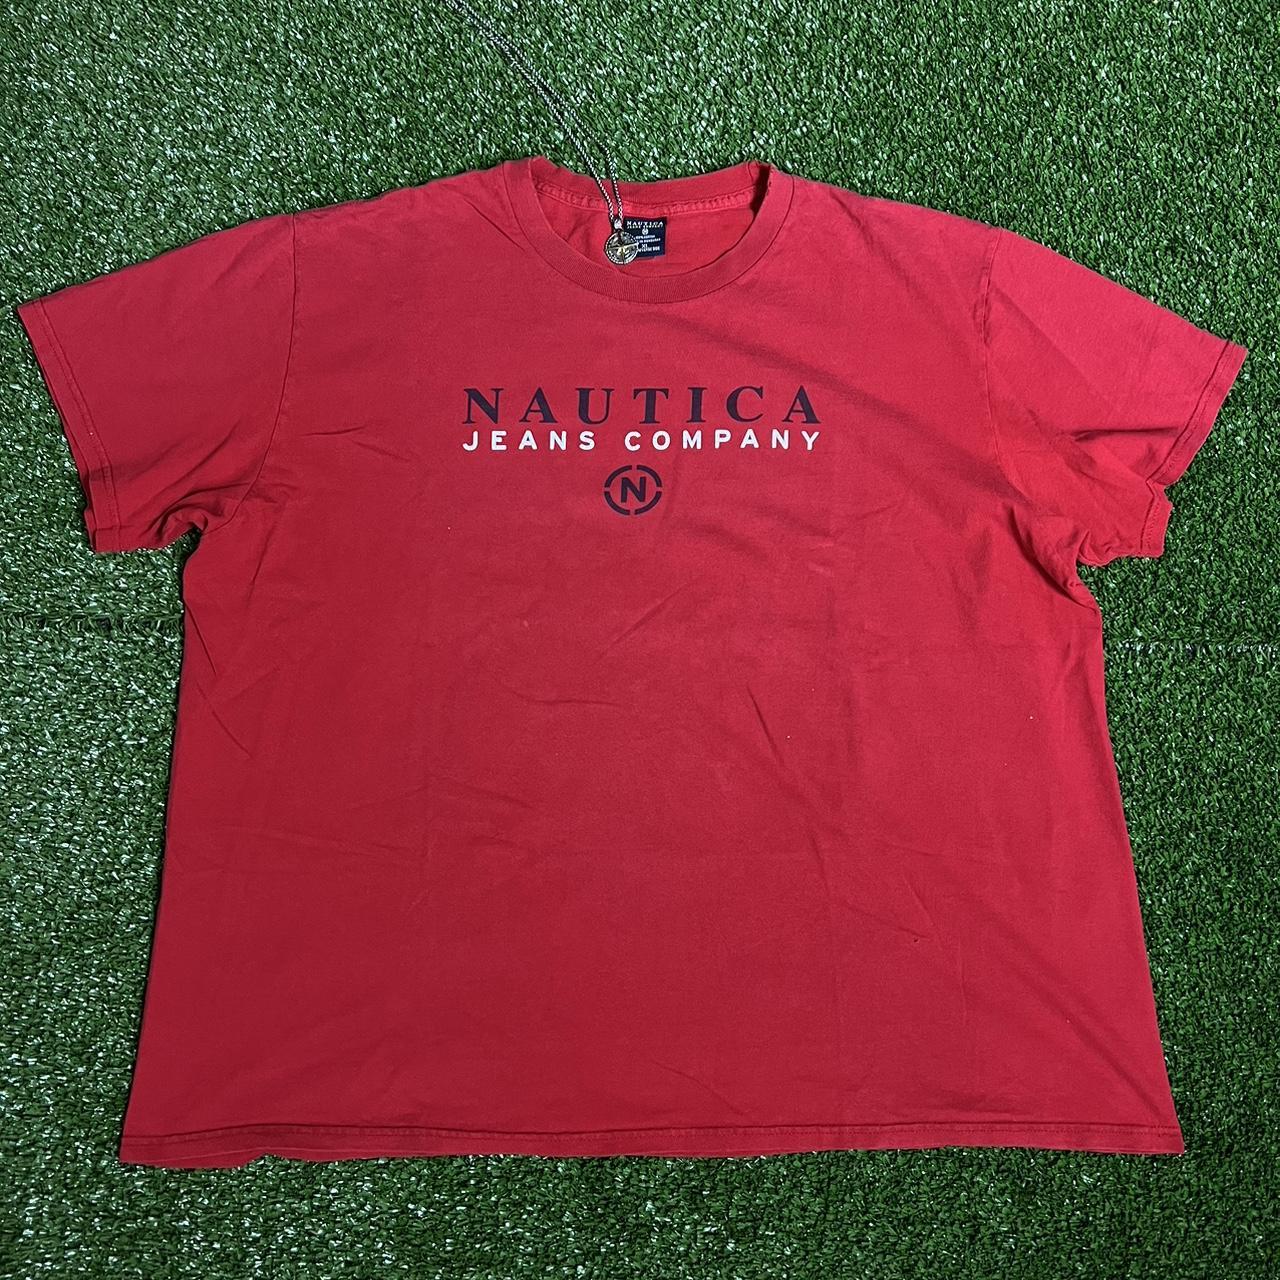 Nautica Jeans Co. Logo T-Shirt XL 2 Side - Depop